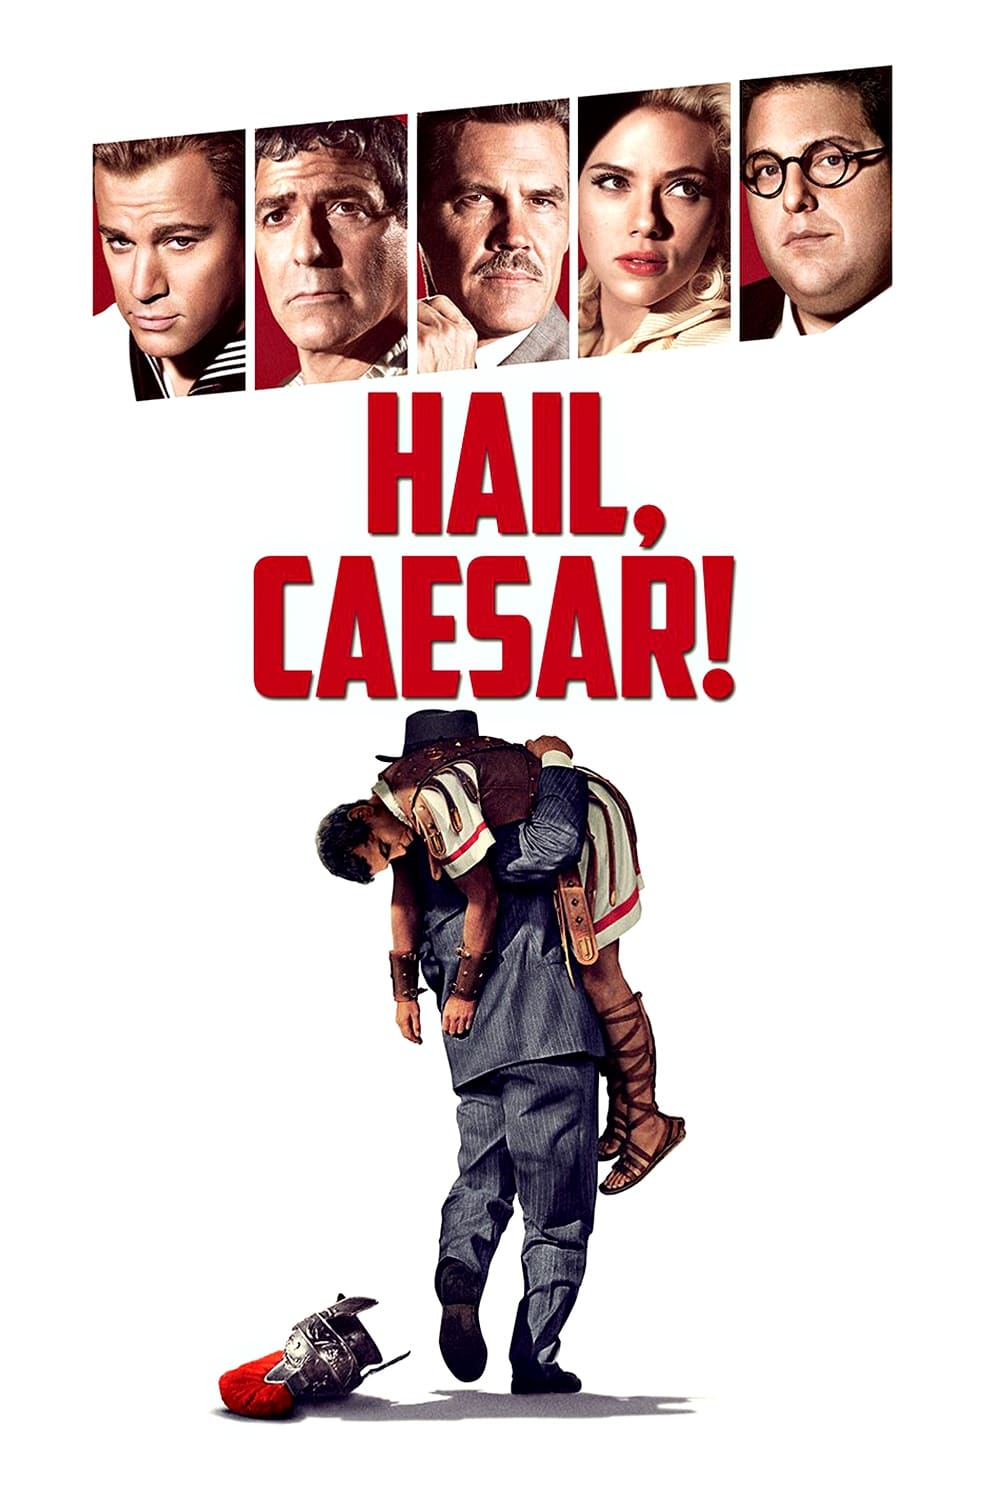 Ave, César!